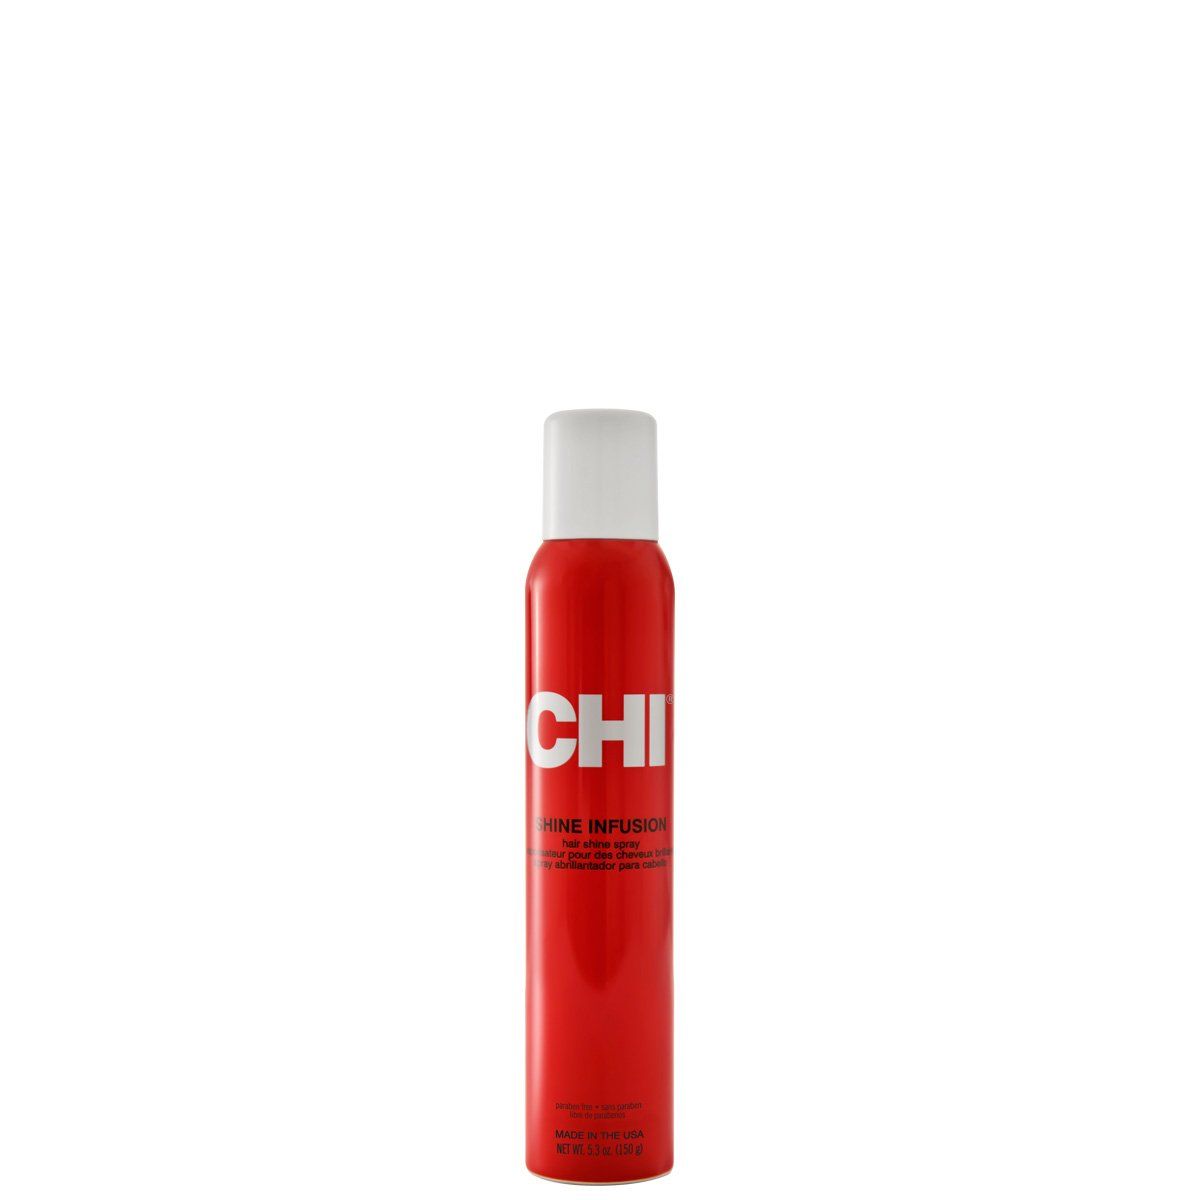 Спрей CHI Styling Shine Infusion Thermal Polishing Spray блеск инфра, 150 г